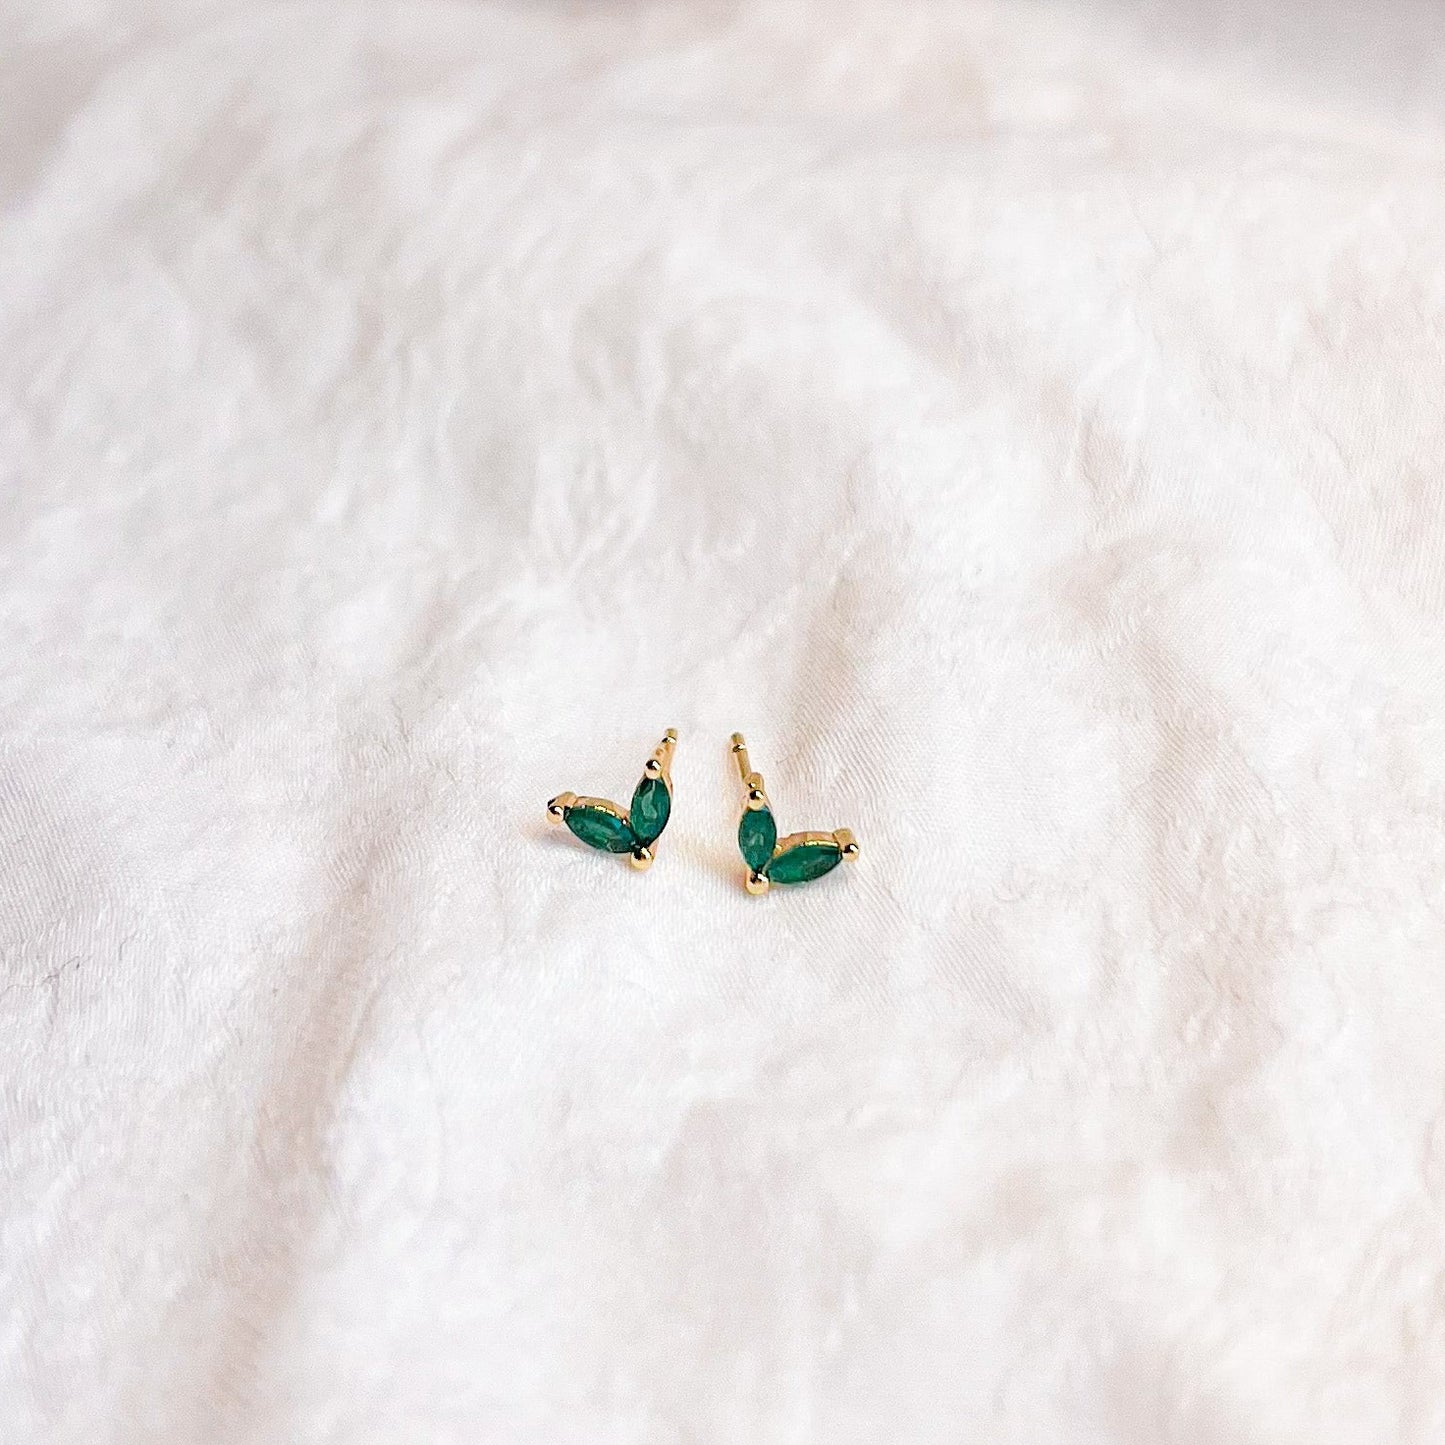 The Green Winged Earrings